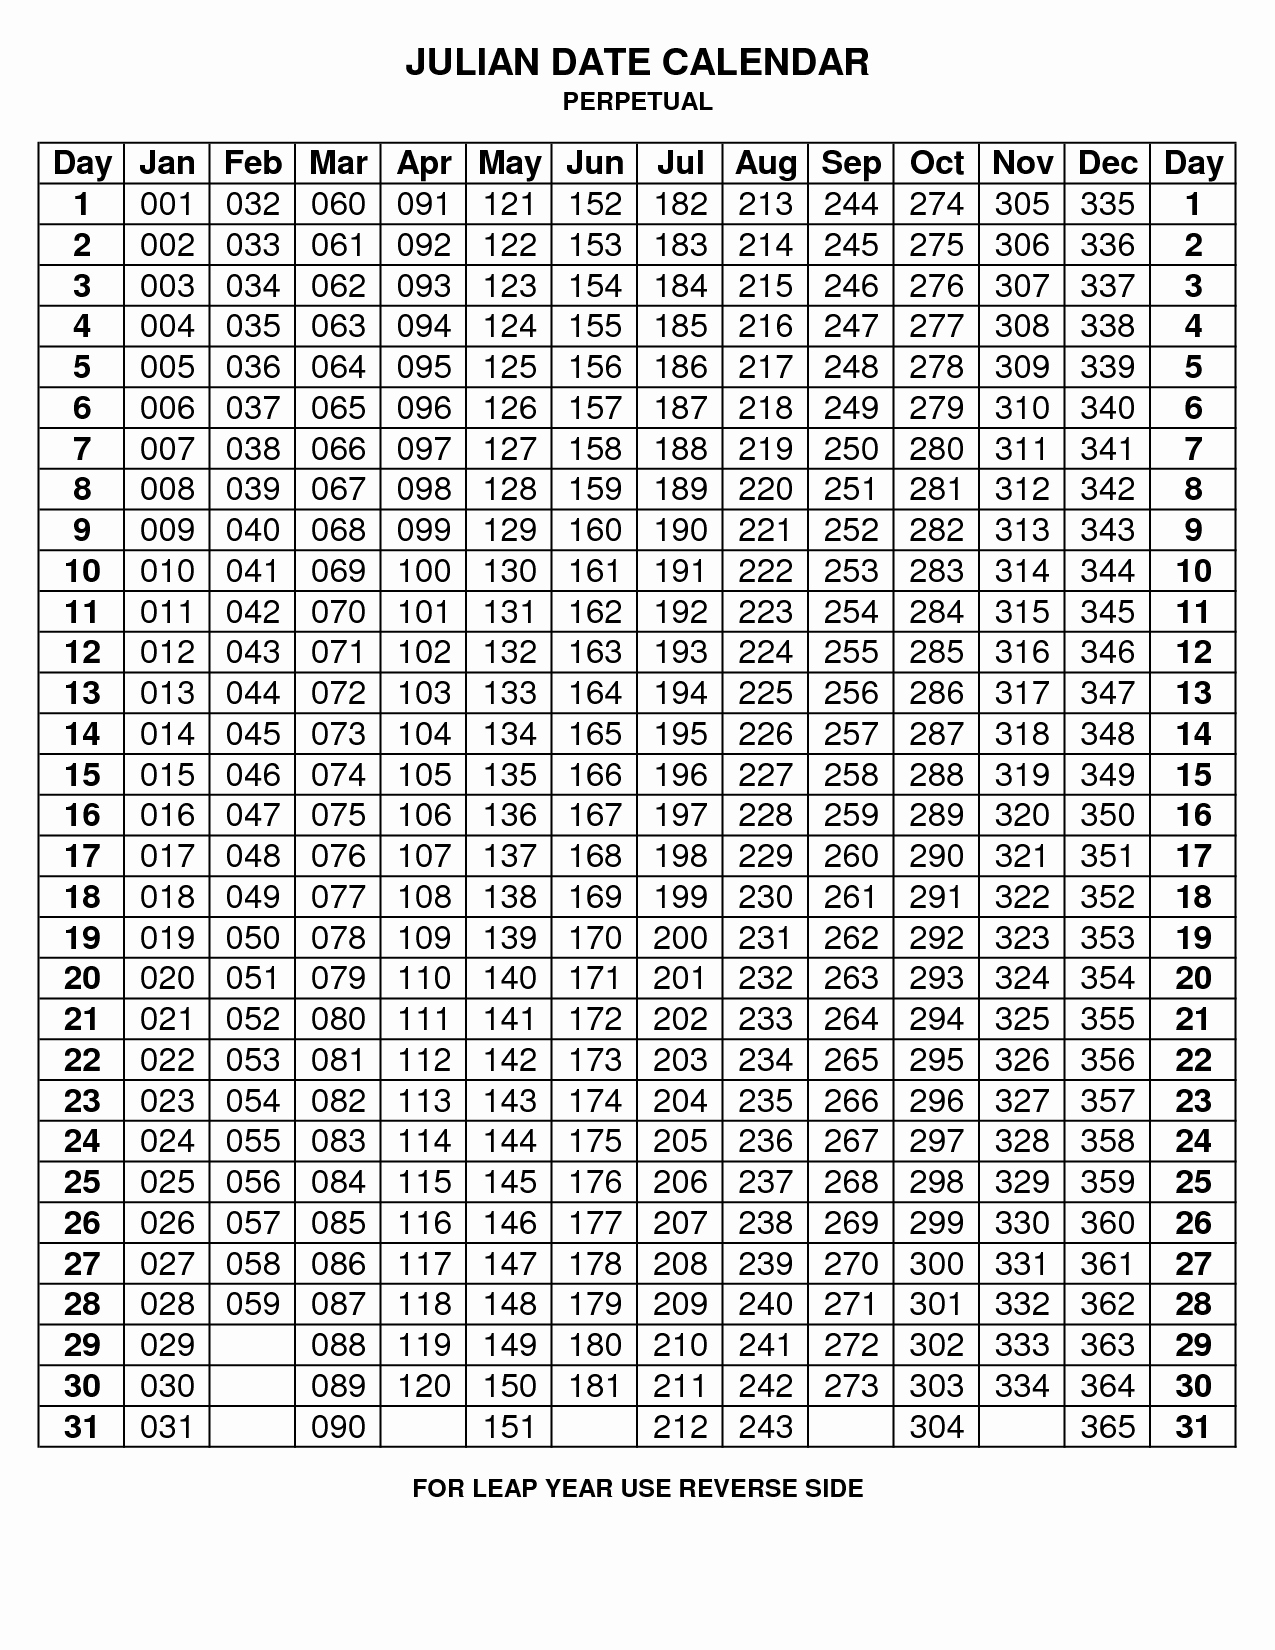 Depo Provera Perpetual Calendar To Print - Calendar  Depo Chart 2021